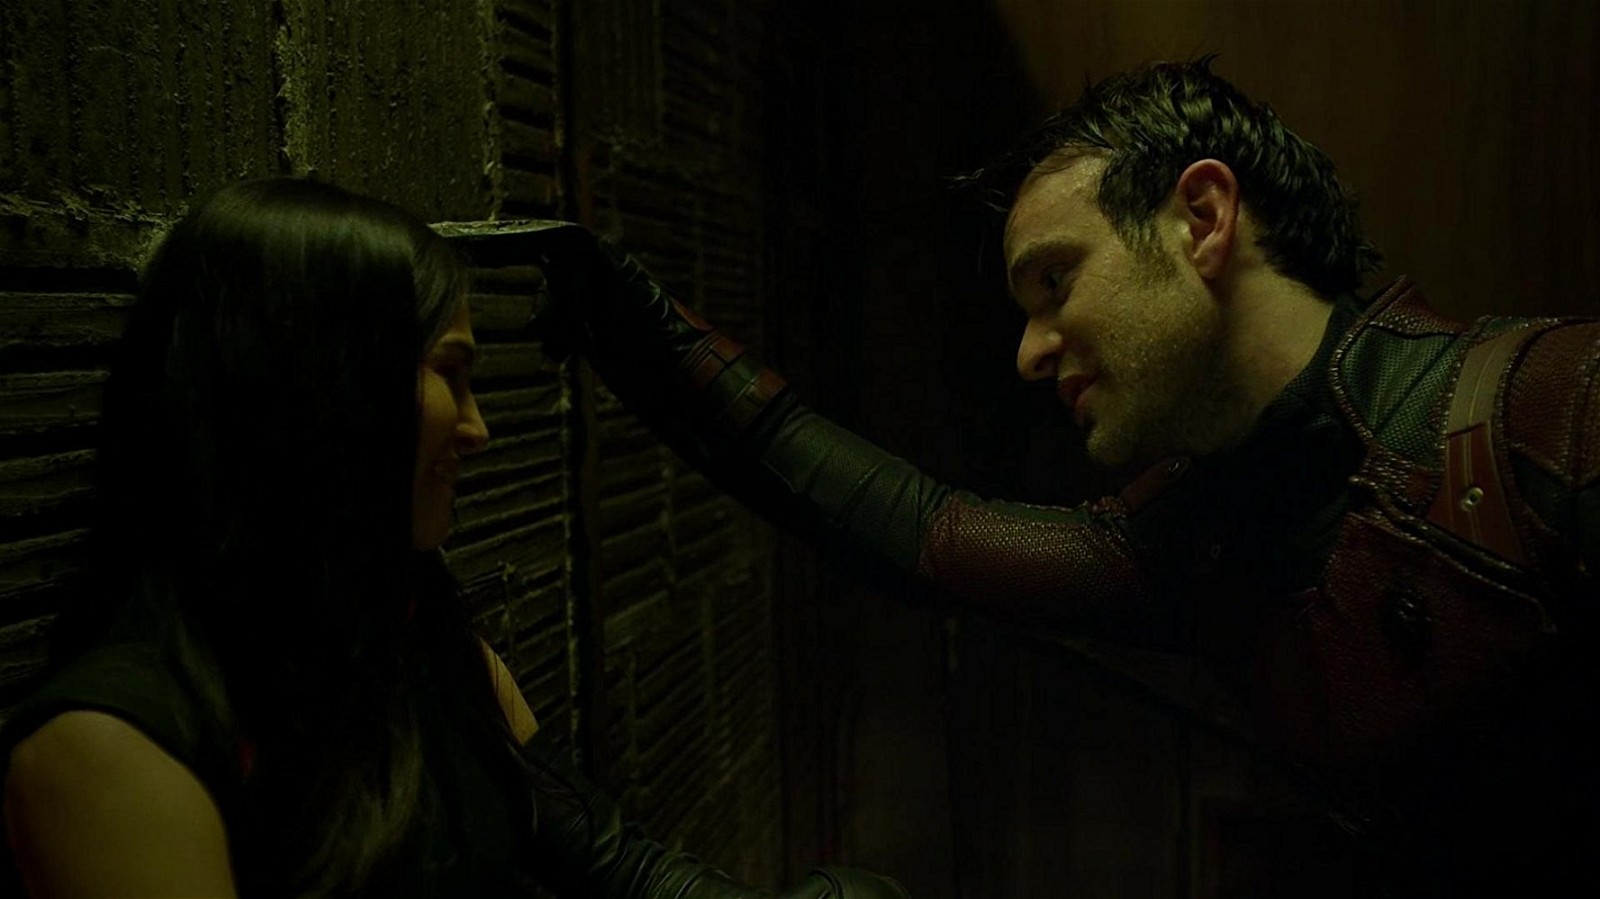 Daredevil and Elektra gets a tragic end